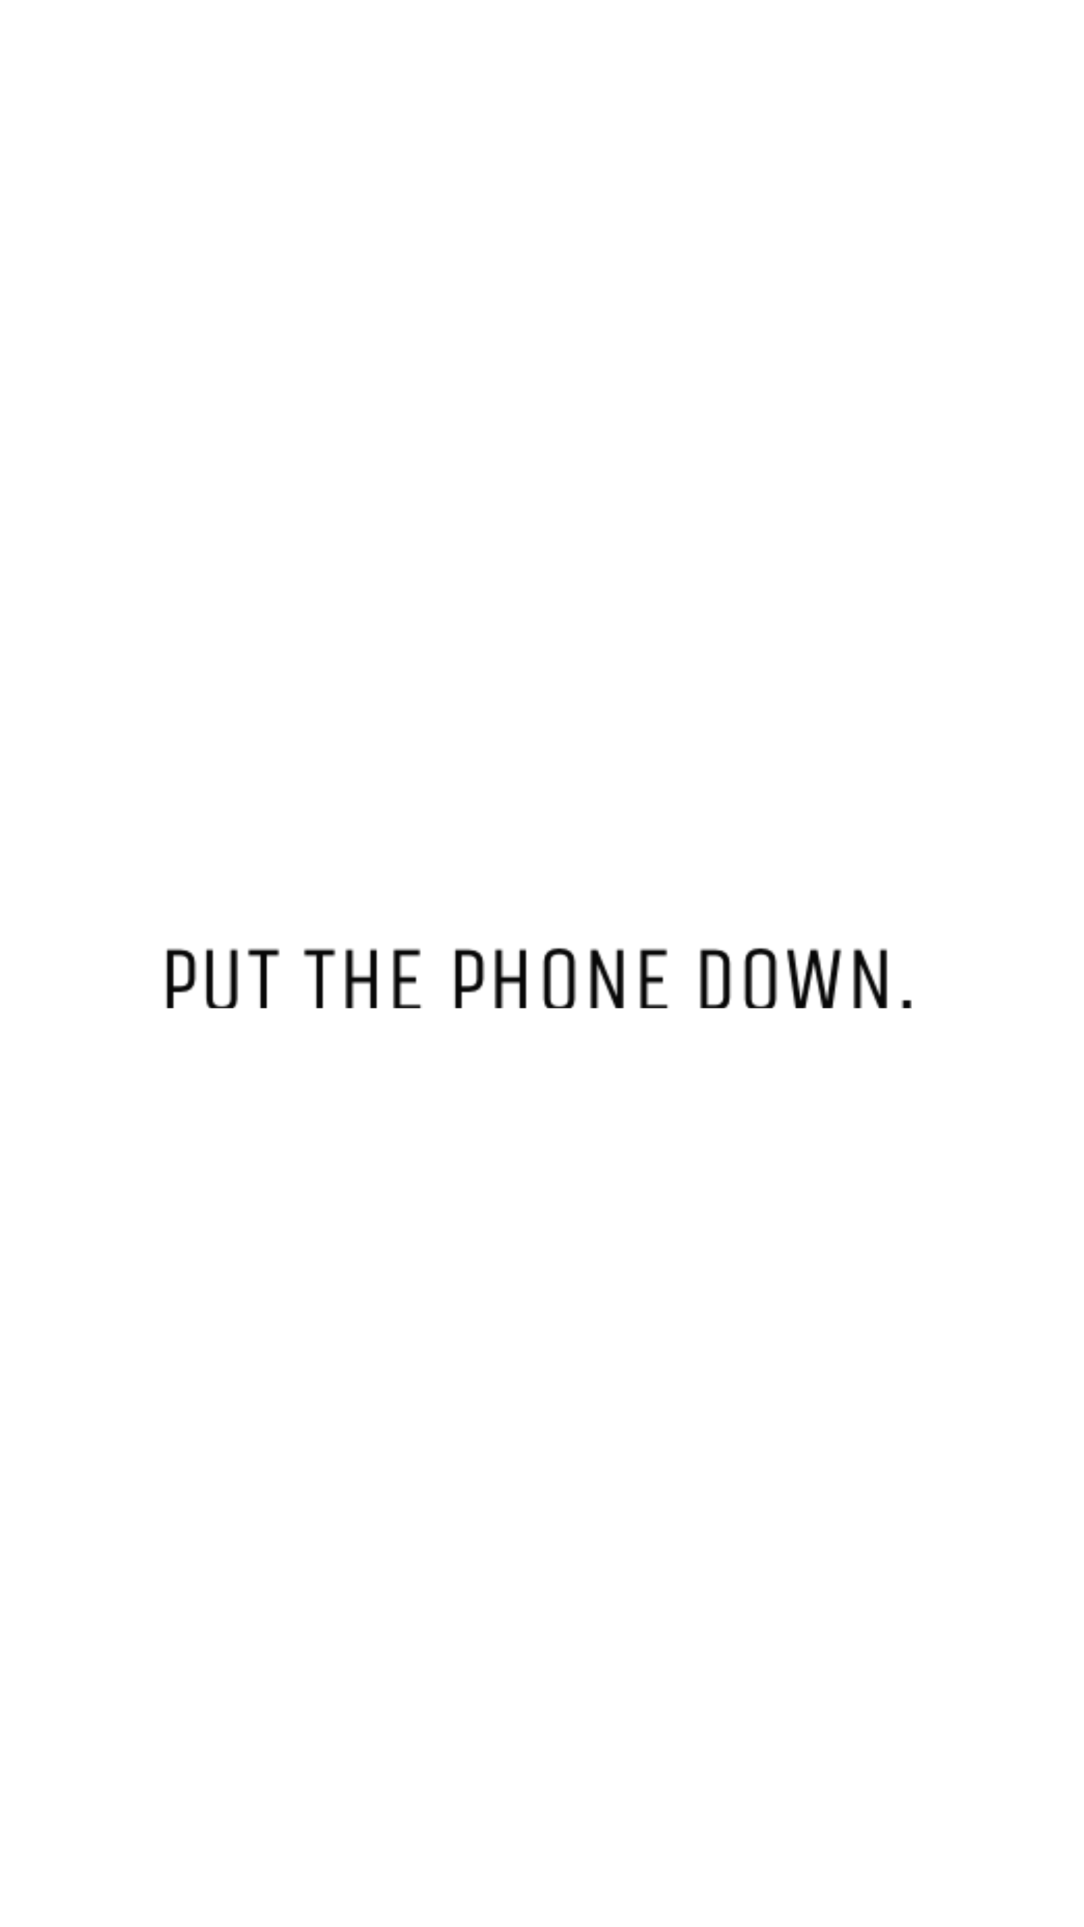 Free Minimal Phone Wallpaper: “Put the Phone Down!” con immagini